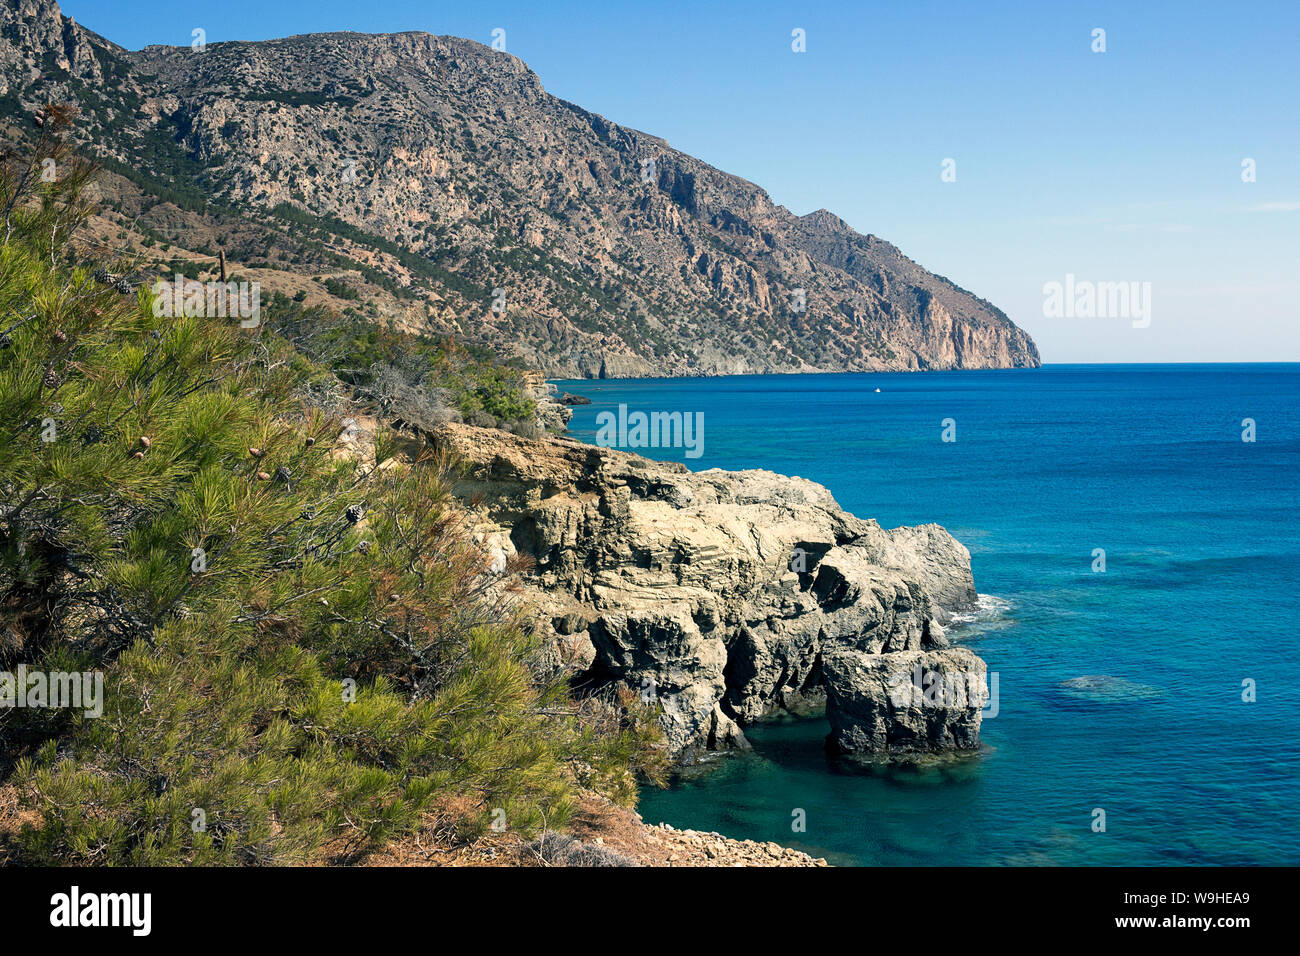 Karpathos island - Vananda coast, beautiful bay surrounded by a pine forest, Aegean sea, Dodecanese Islands, Greece Stock Photo